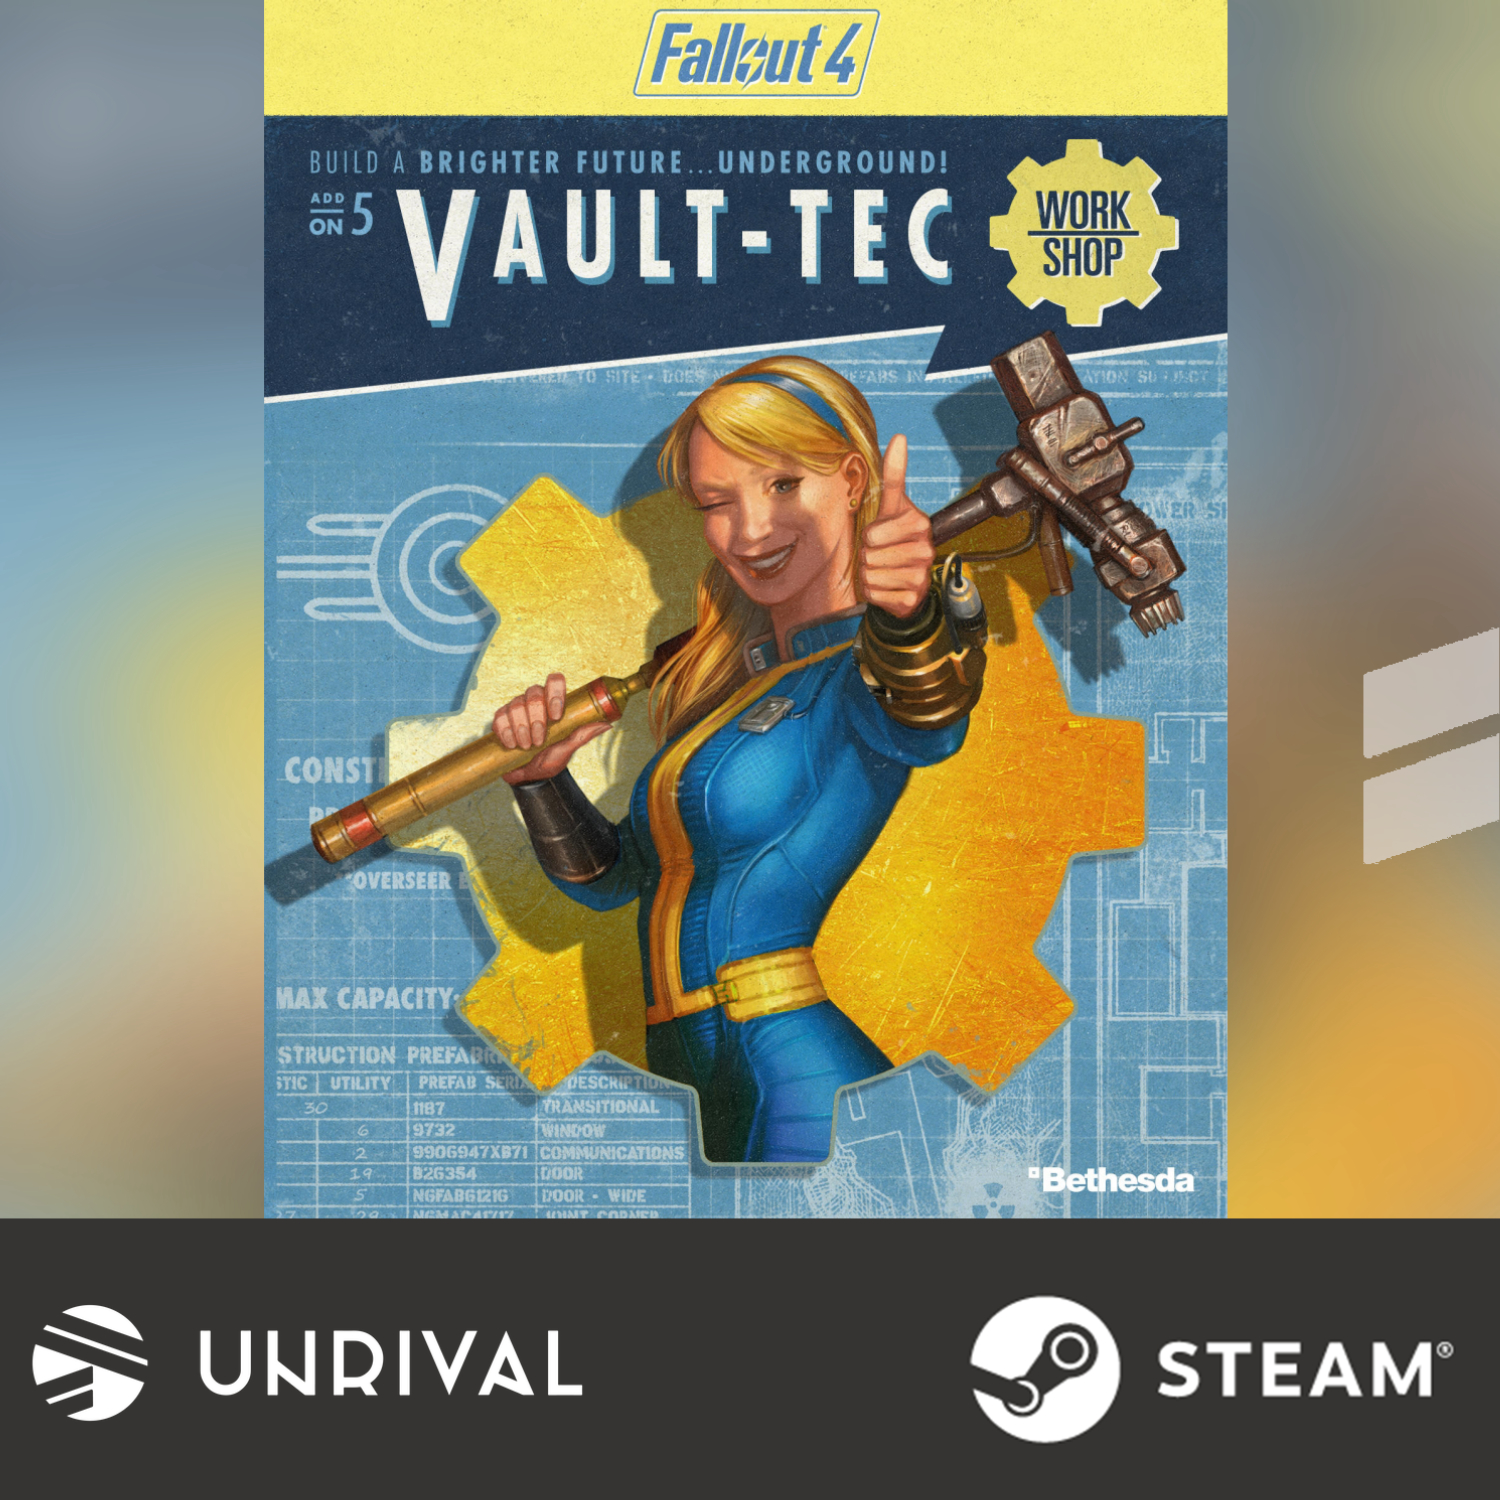 what to do fallout 4 vault tec dlc